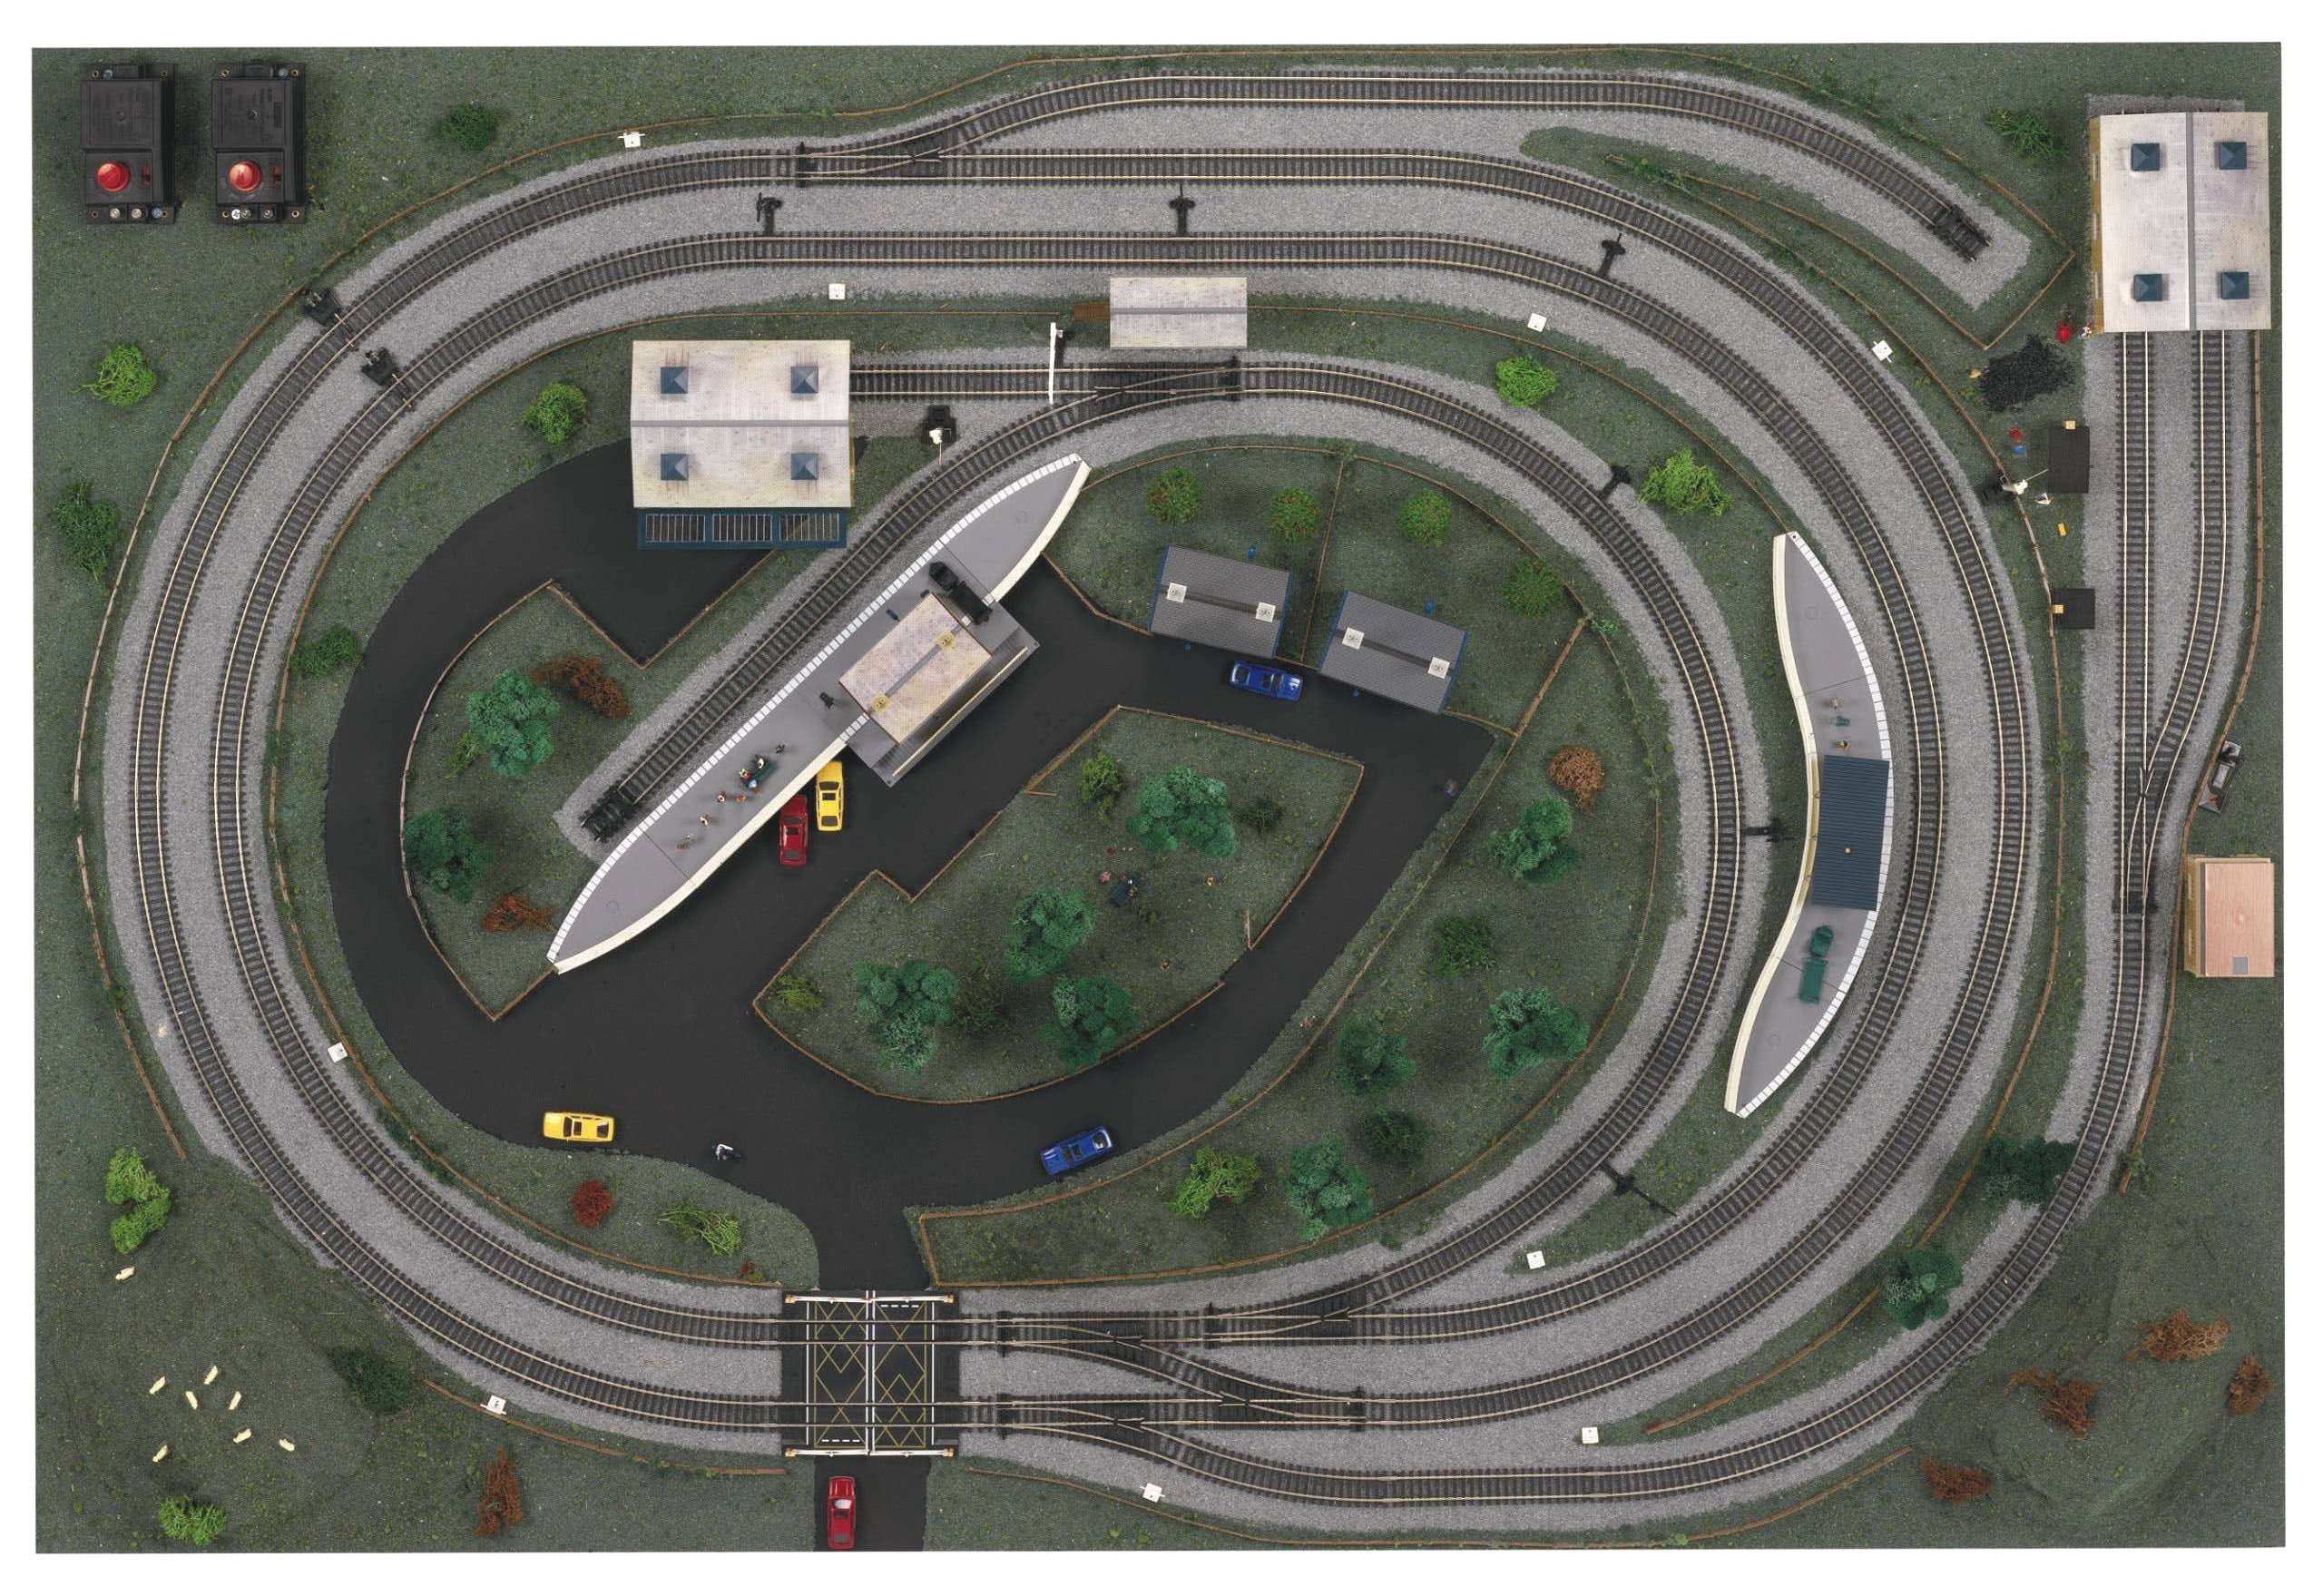 railway layout image